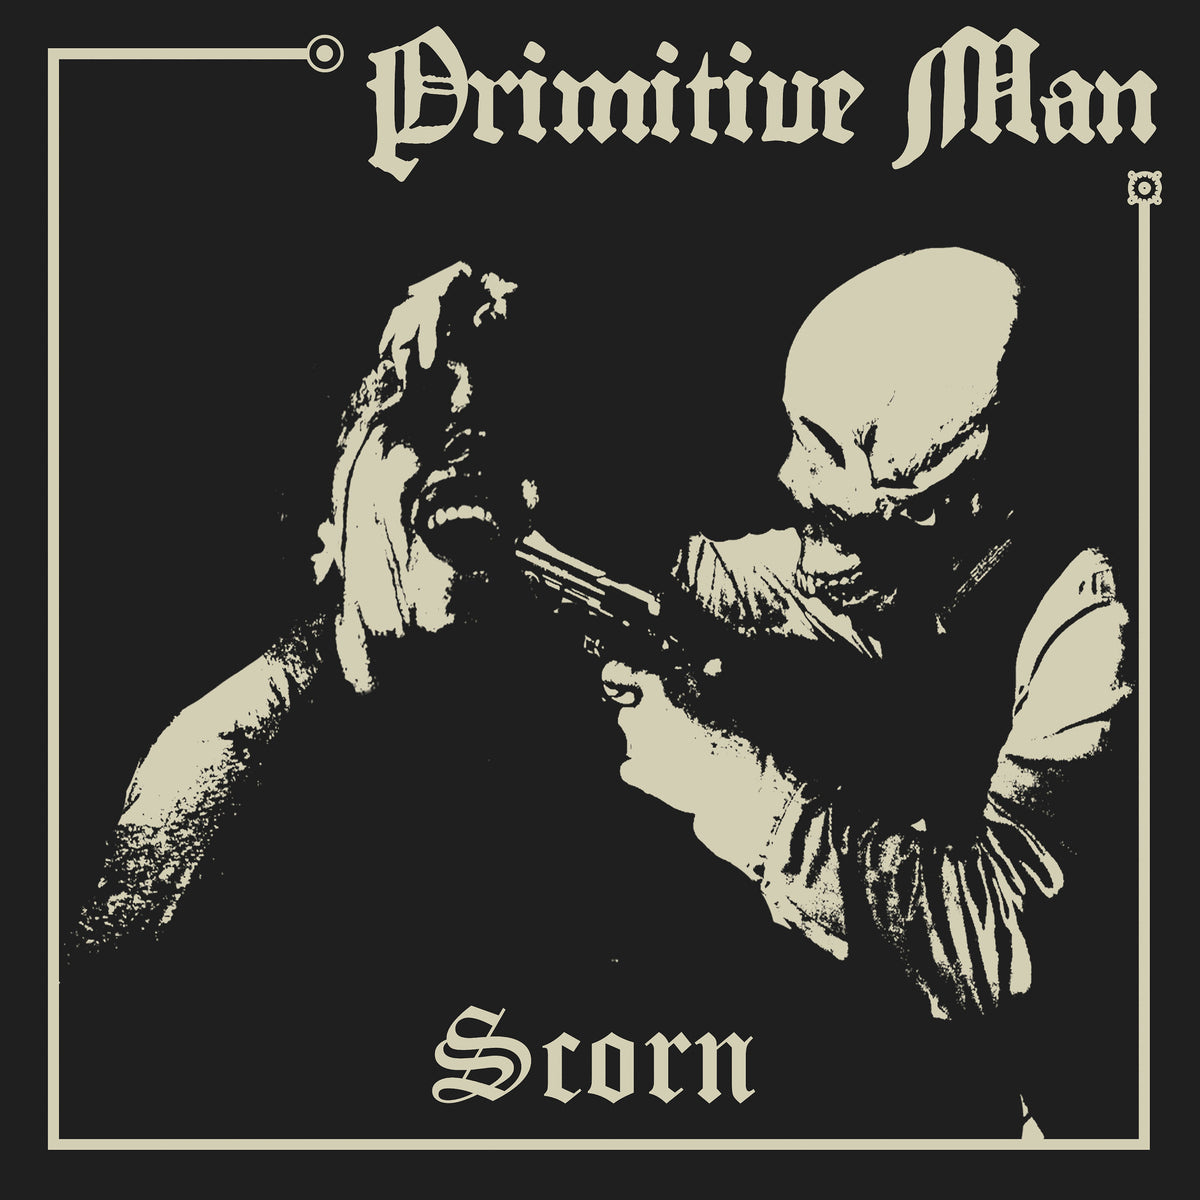 Primitive Man - Scorn